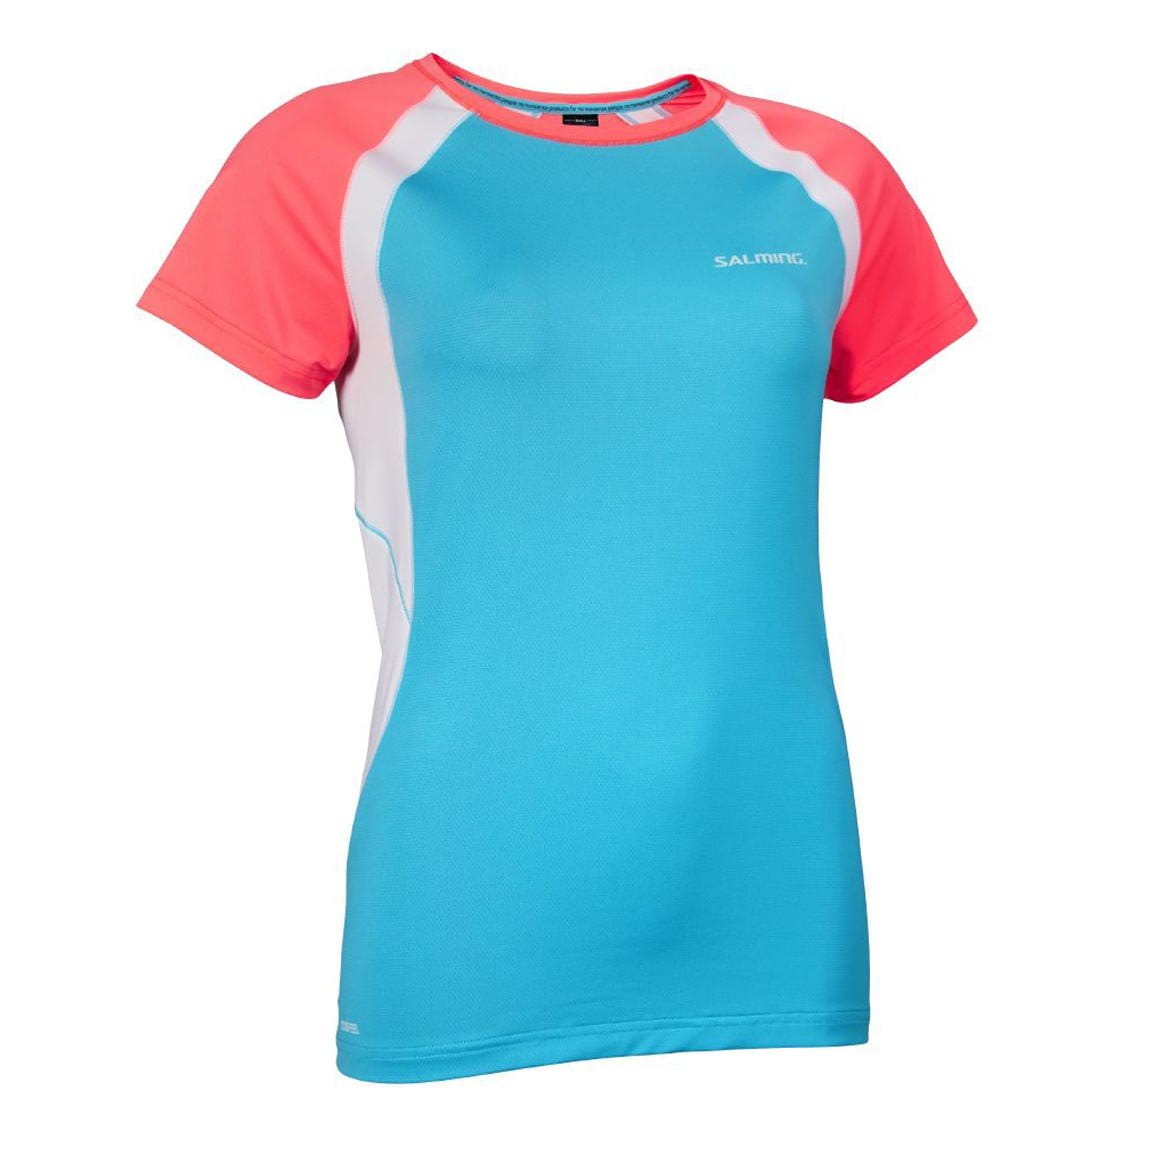 Camiseta de partido de mujer Salming Nova Tee Women Coral/Light Blue